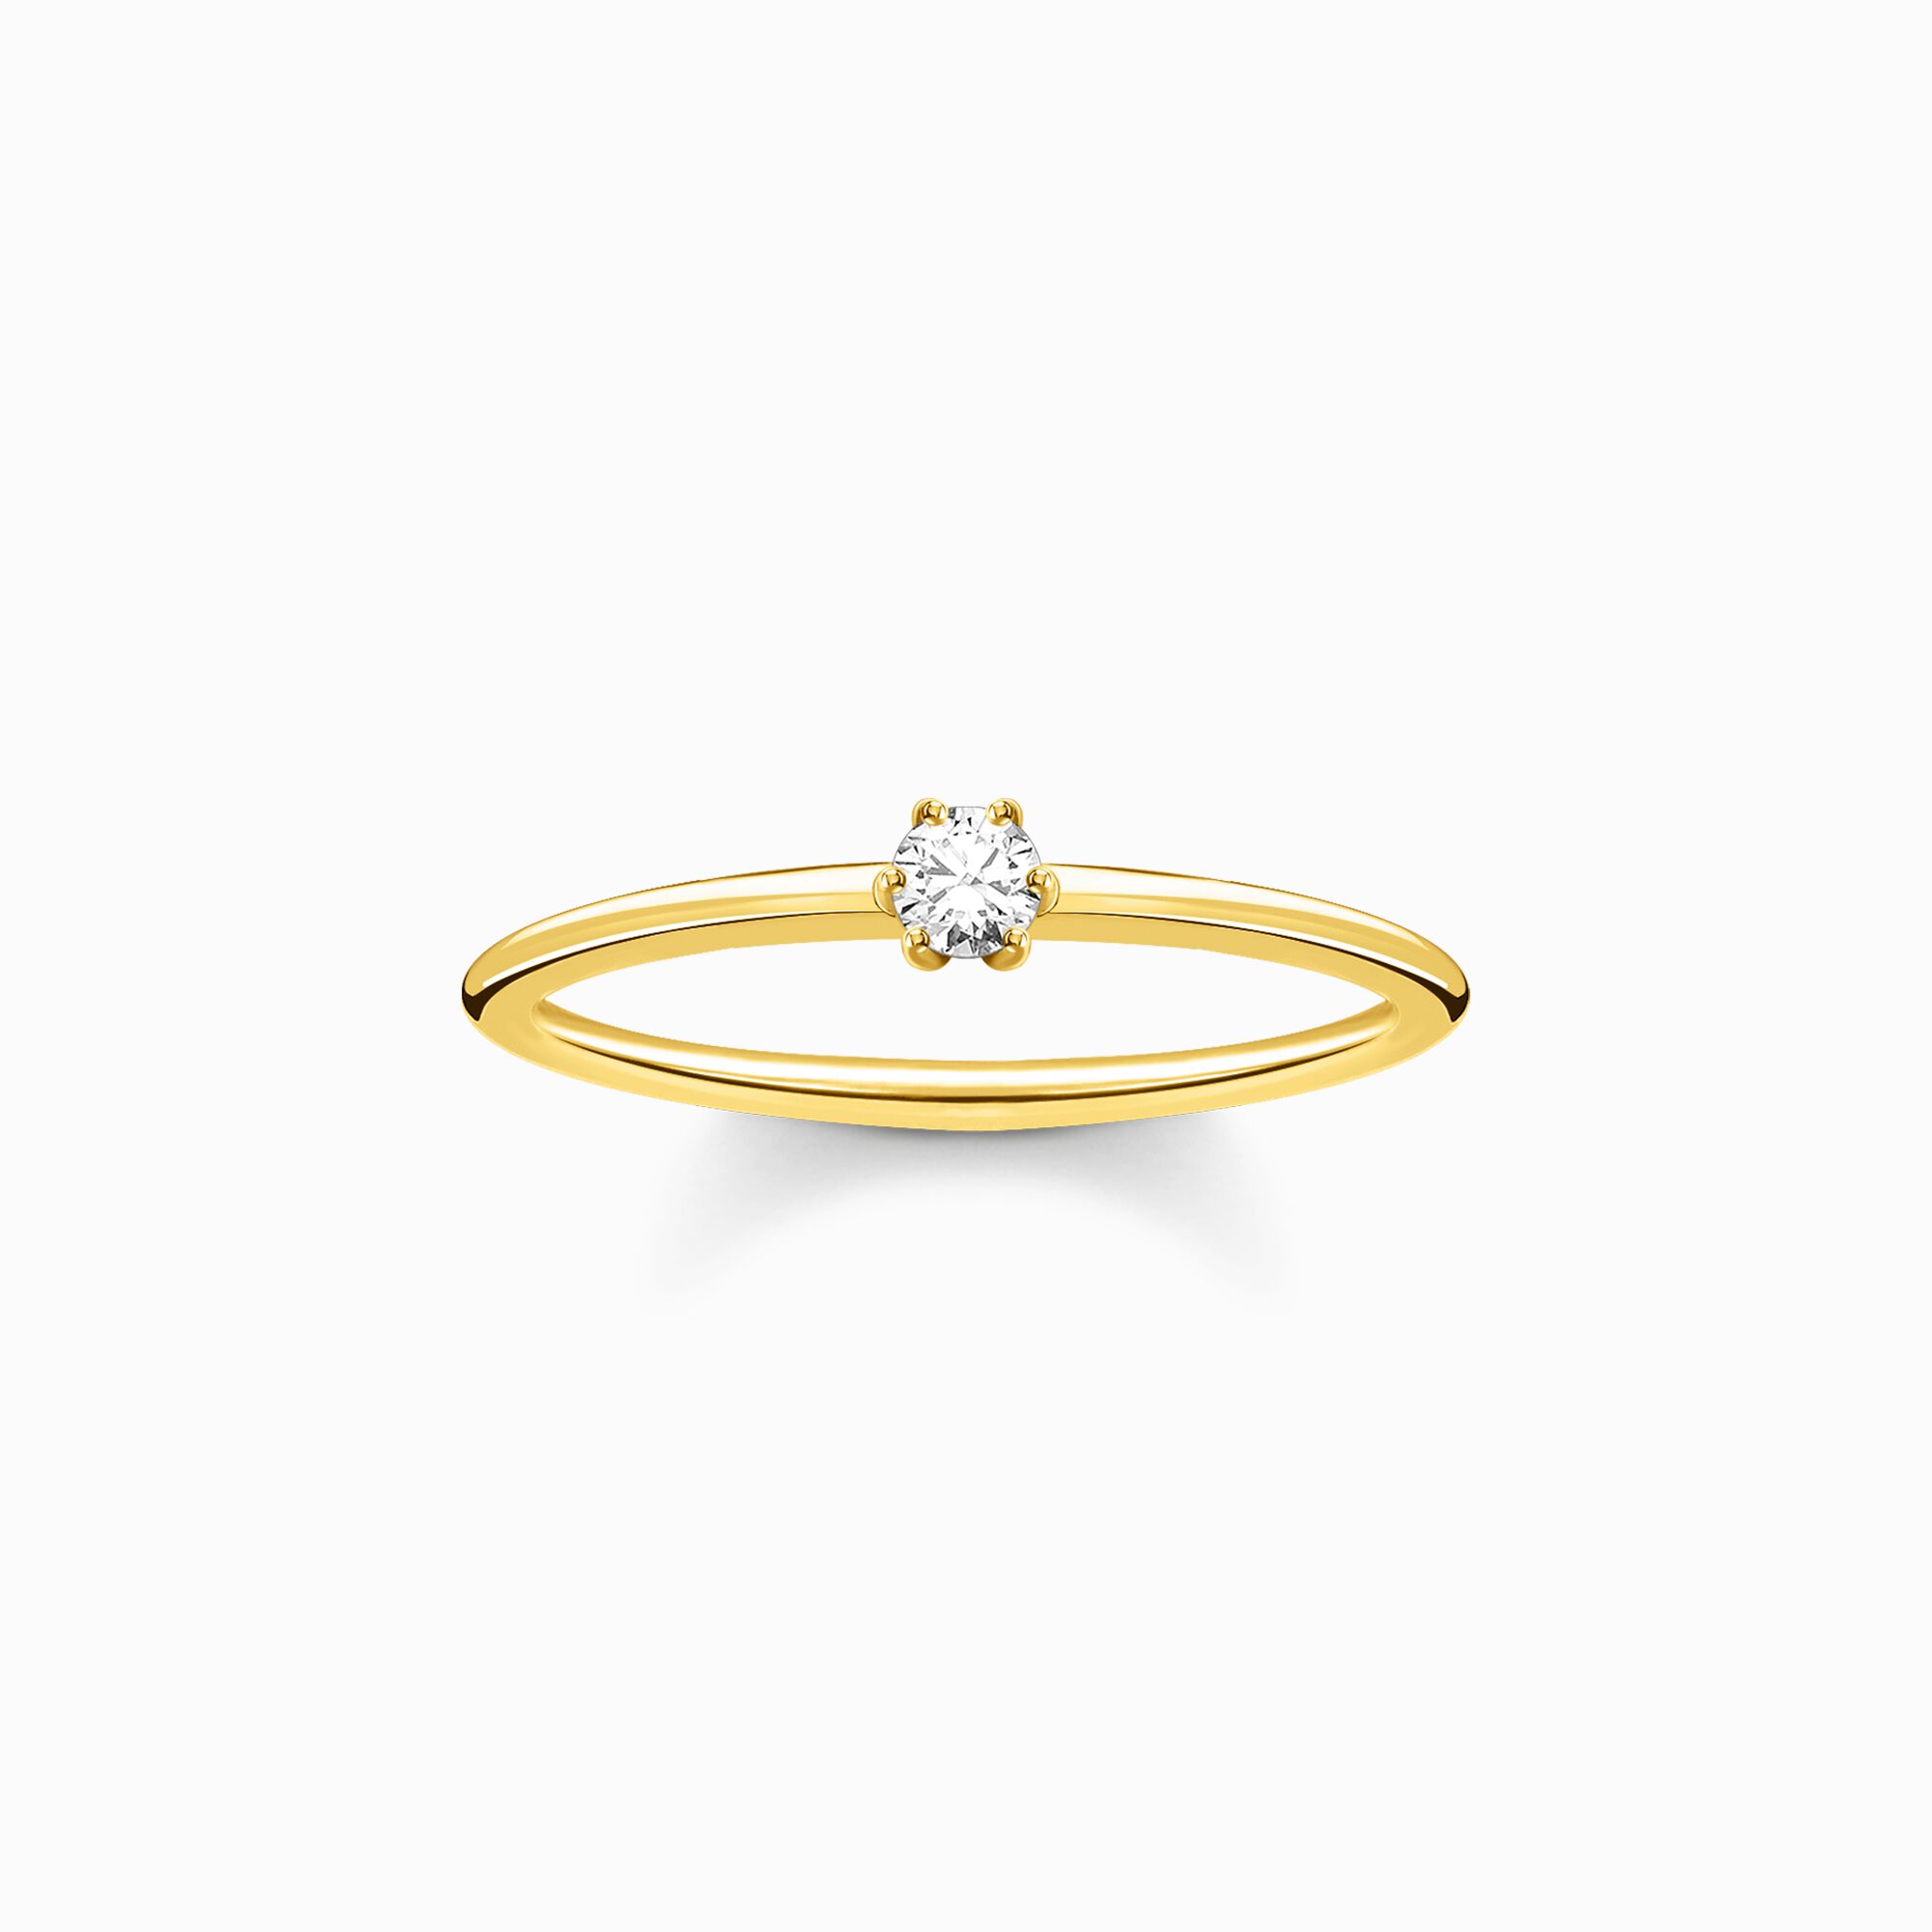 Ring vit sten guld ur kollektionen Charming Collection i THOMAS SABO:s onlineshop